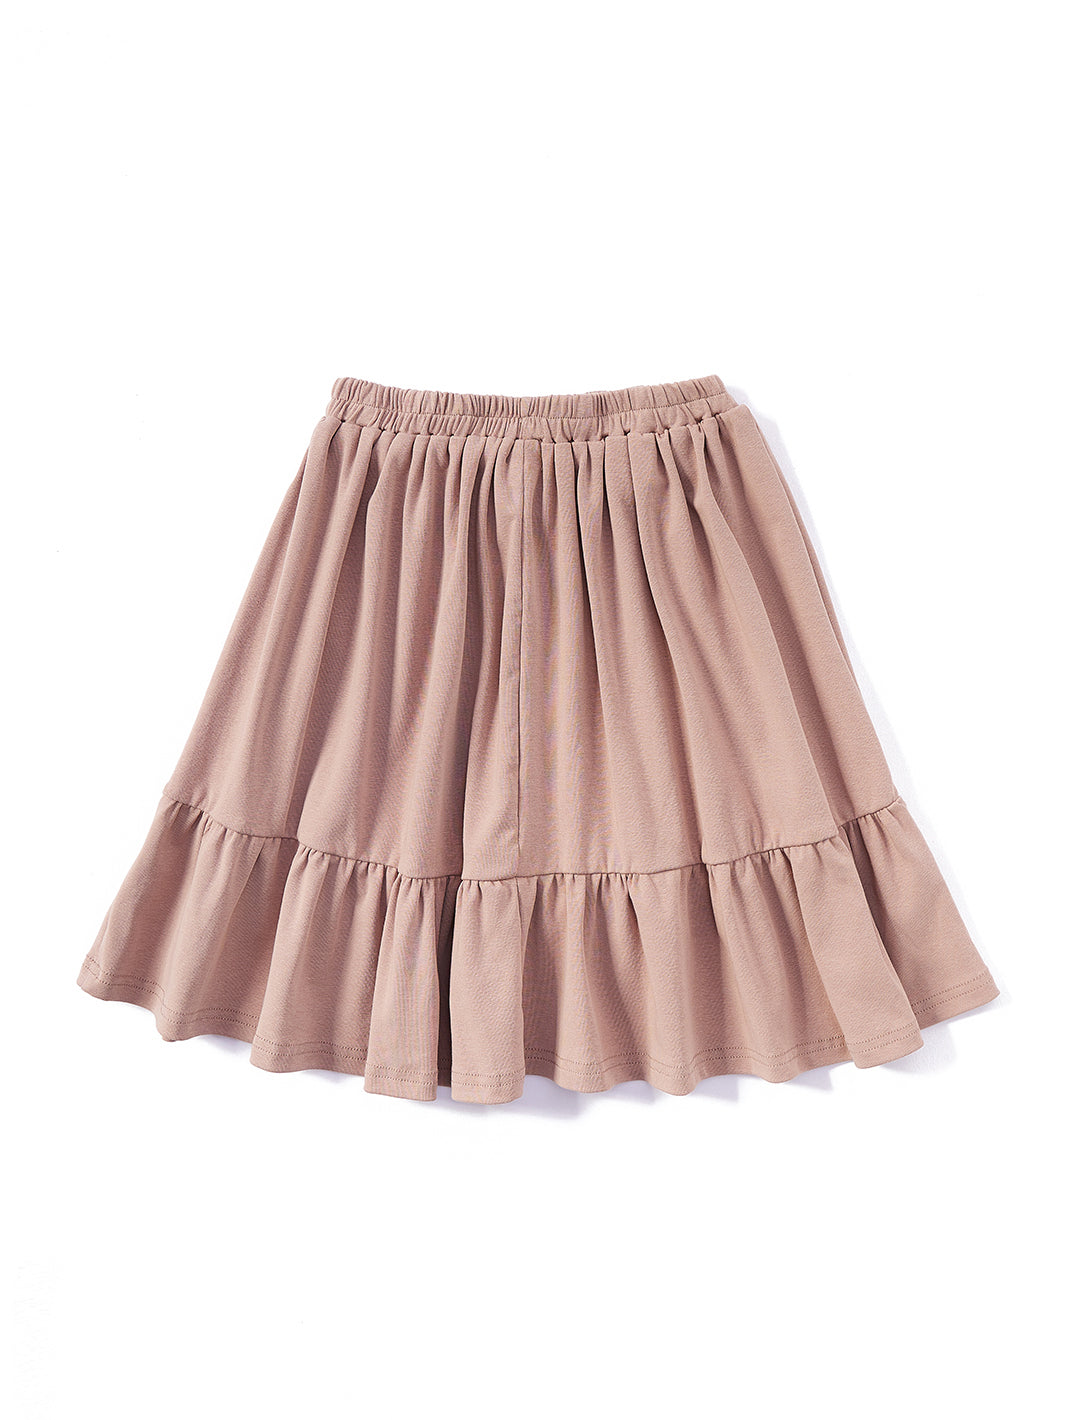 Basic Rib Low Cut Skirt - Taupe